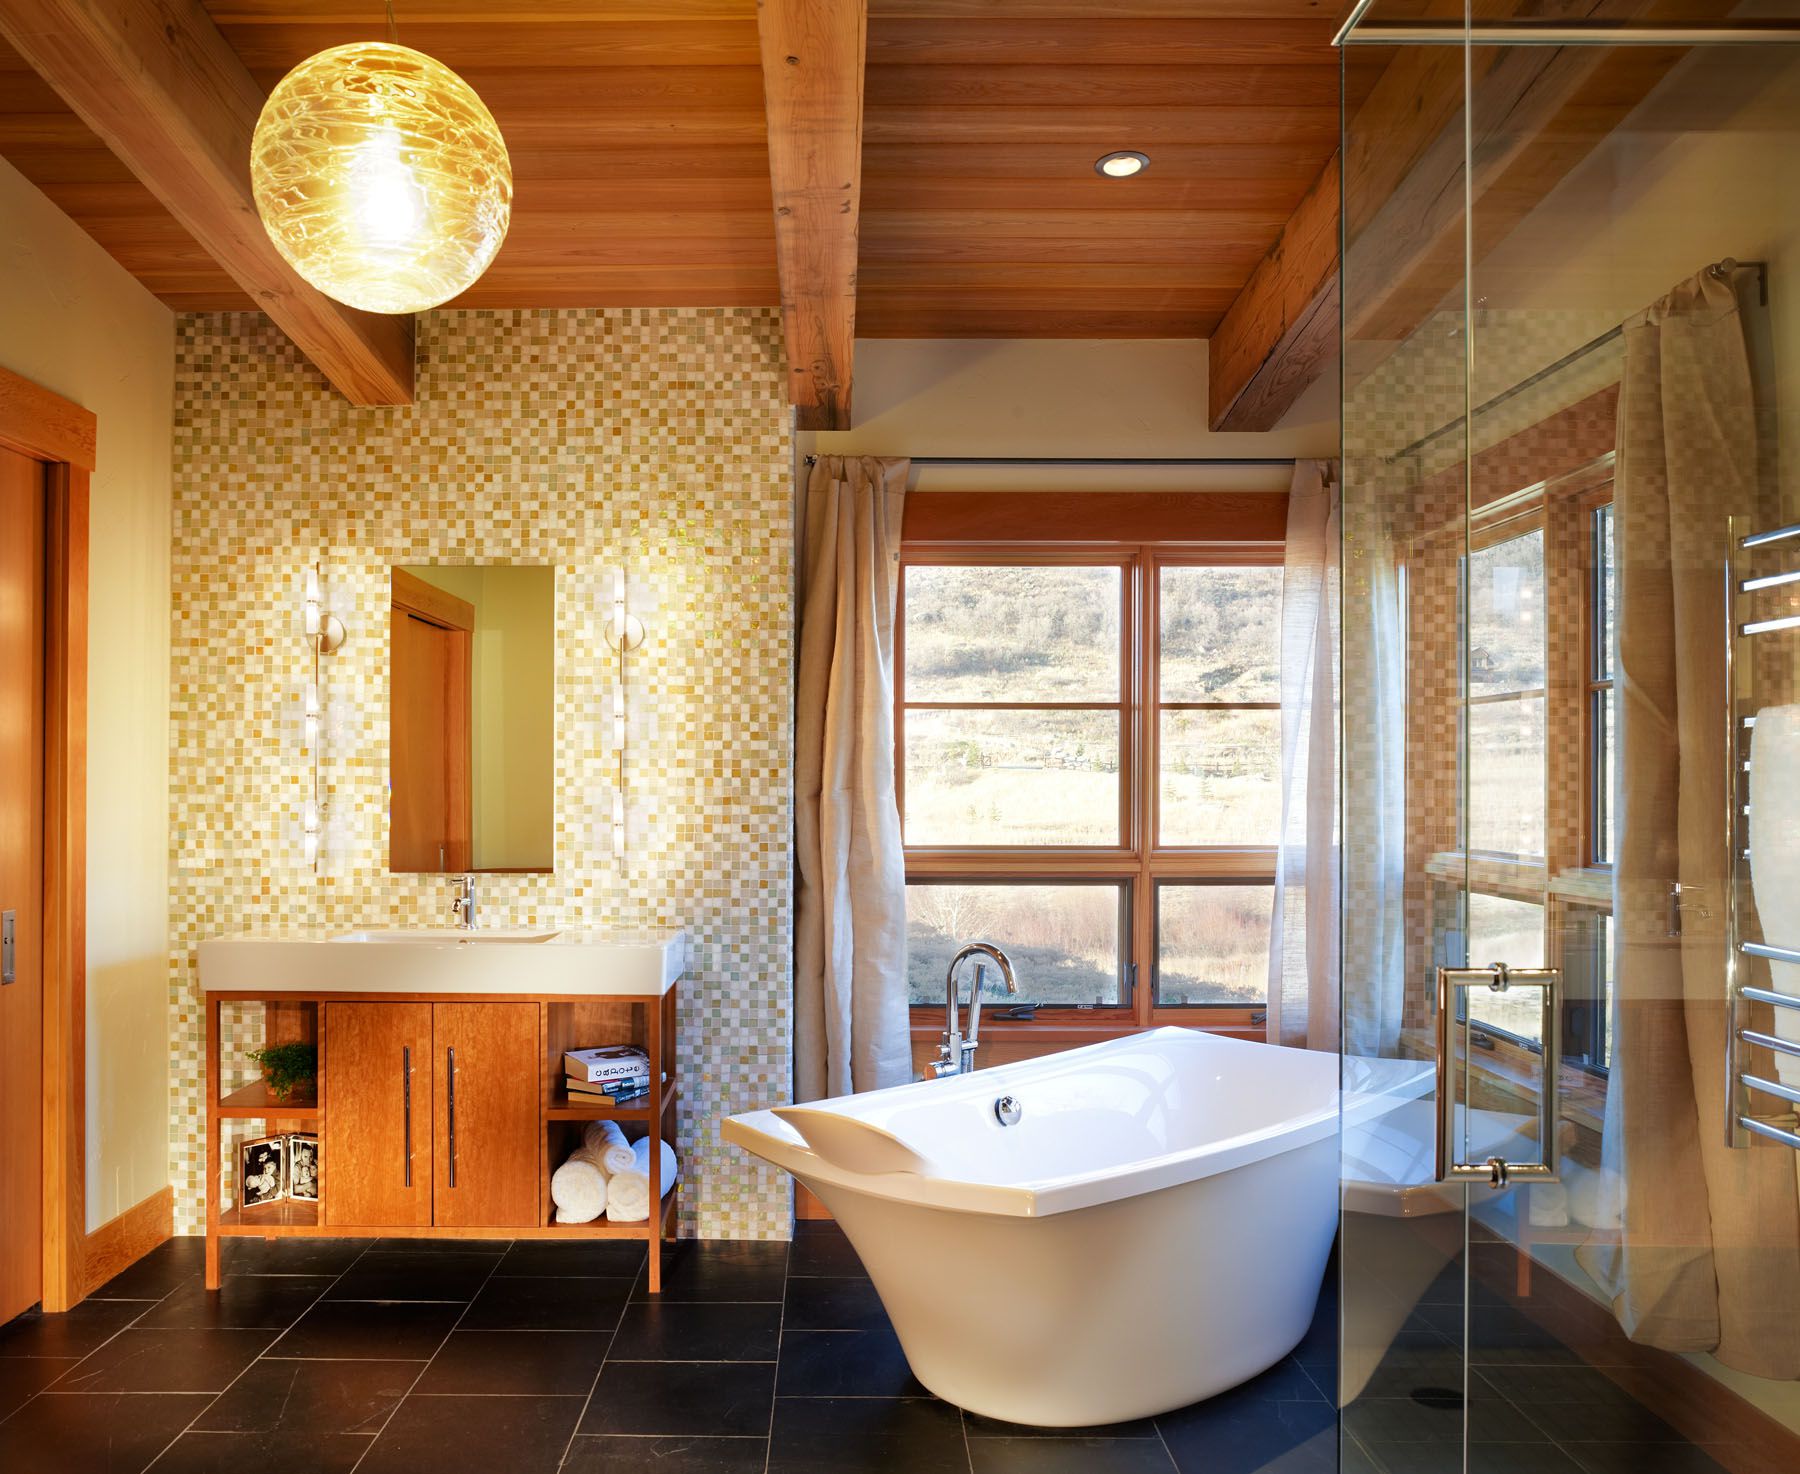 Luxury-Rustic-Bathroom-Design-Ideas.